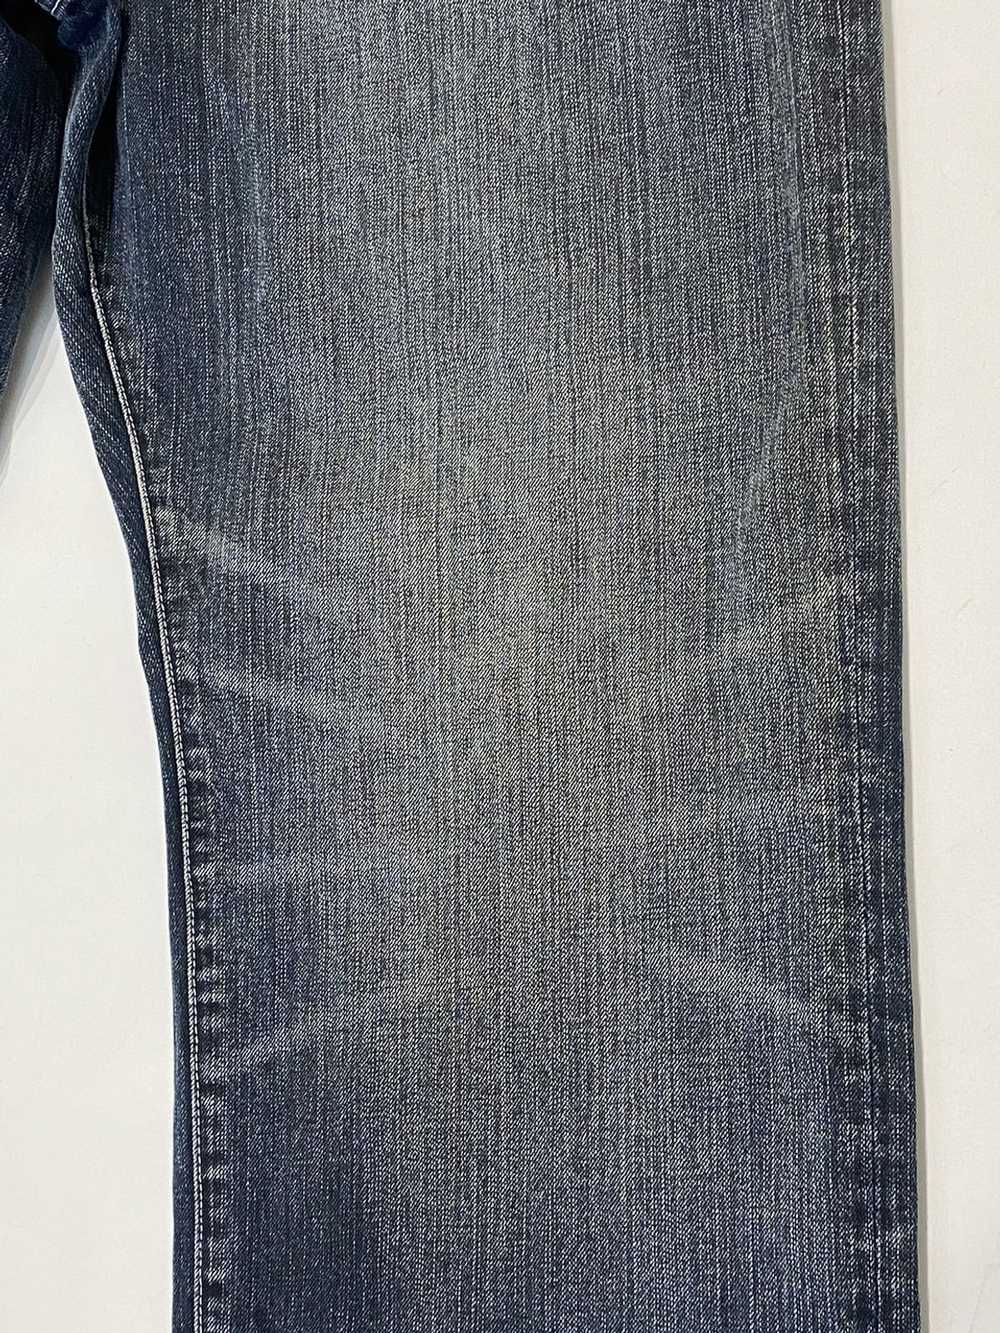 Akademiks Akademiks Men's Jeans Size 40 - image 4